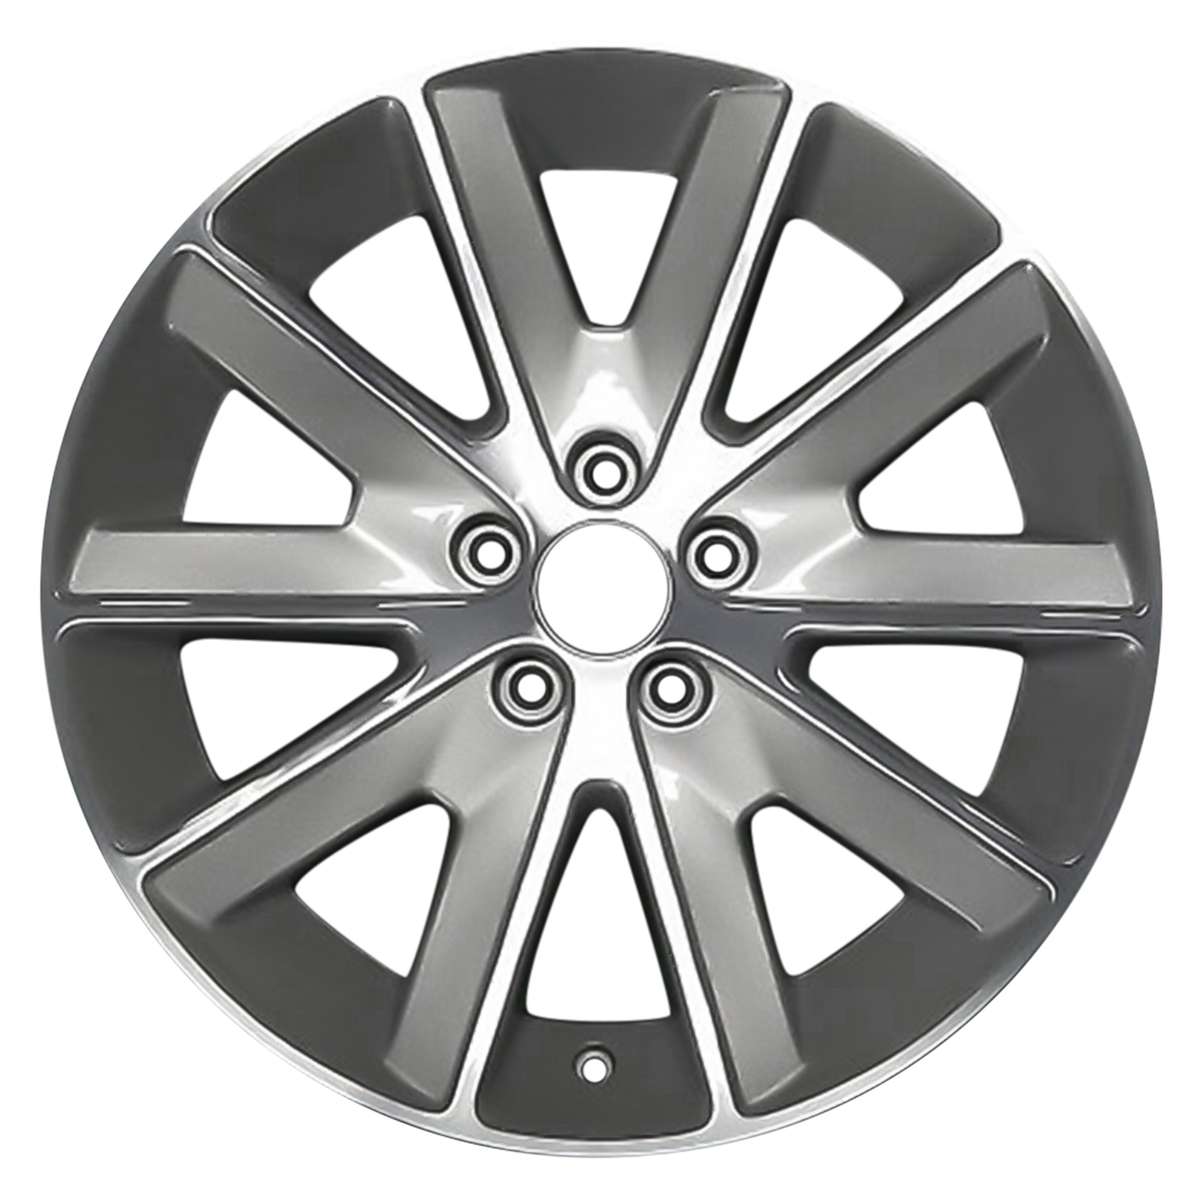 2014 Lincoln MKT 18" OEM Wheel Rim W10155H